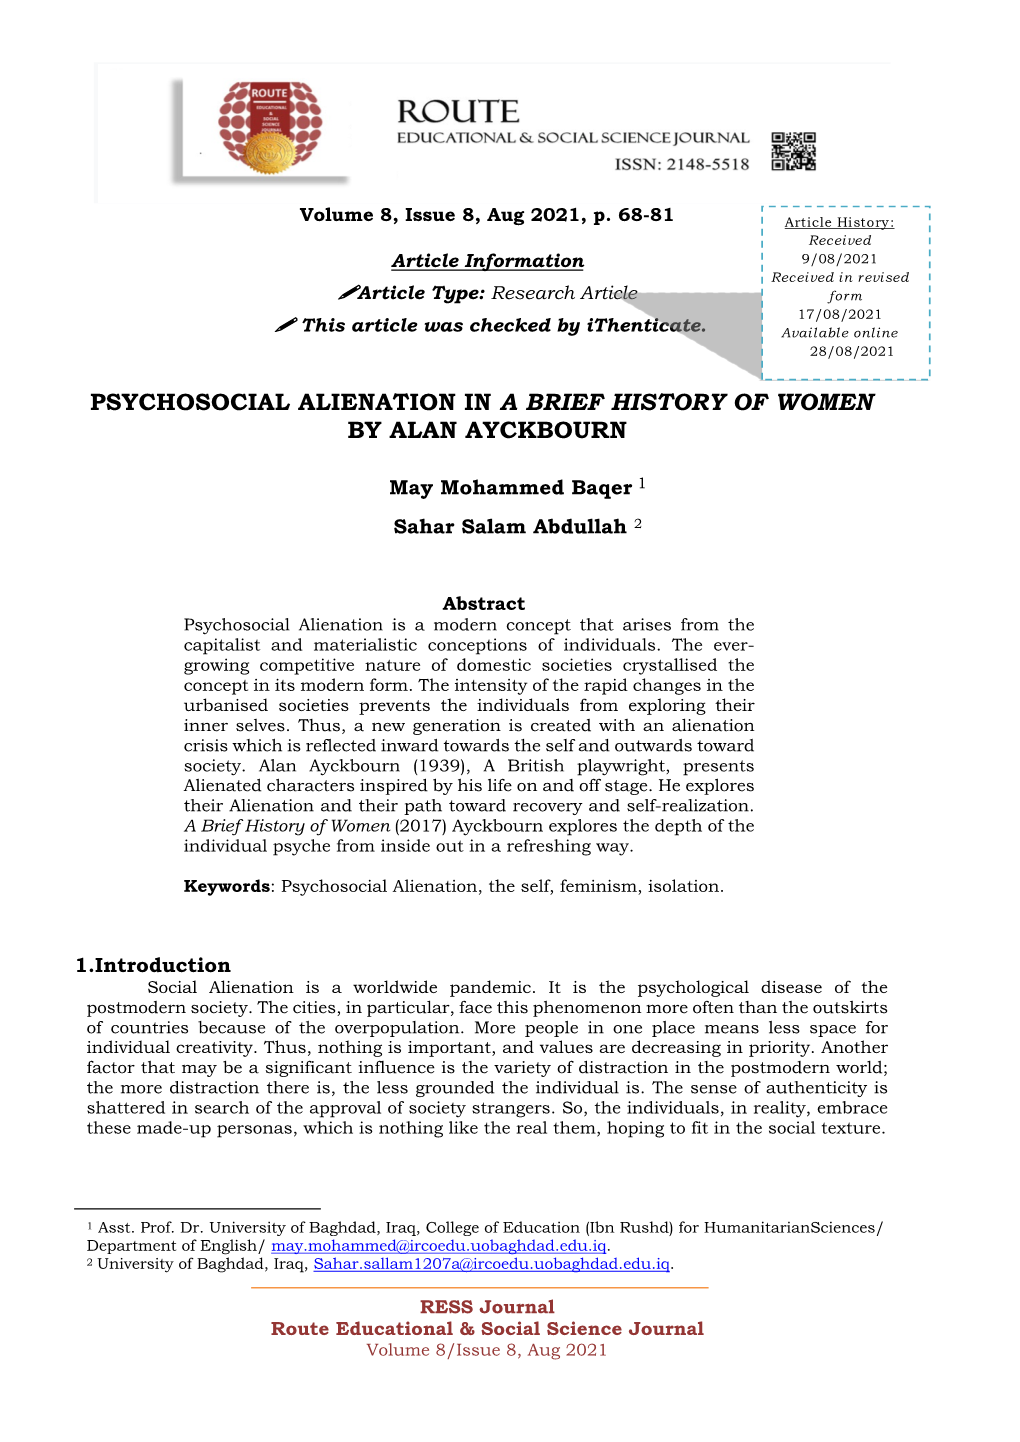 Psychosocial Alienation in a Brief History of Women by Alan Ayckbourn